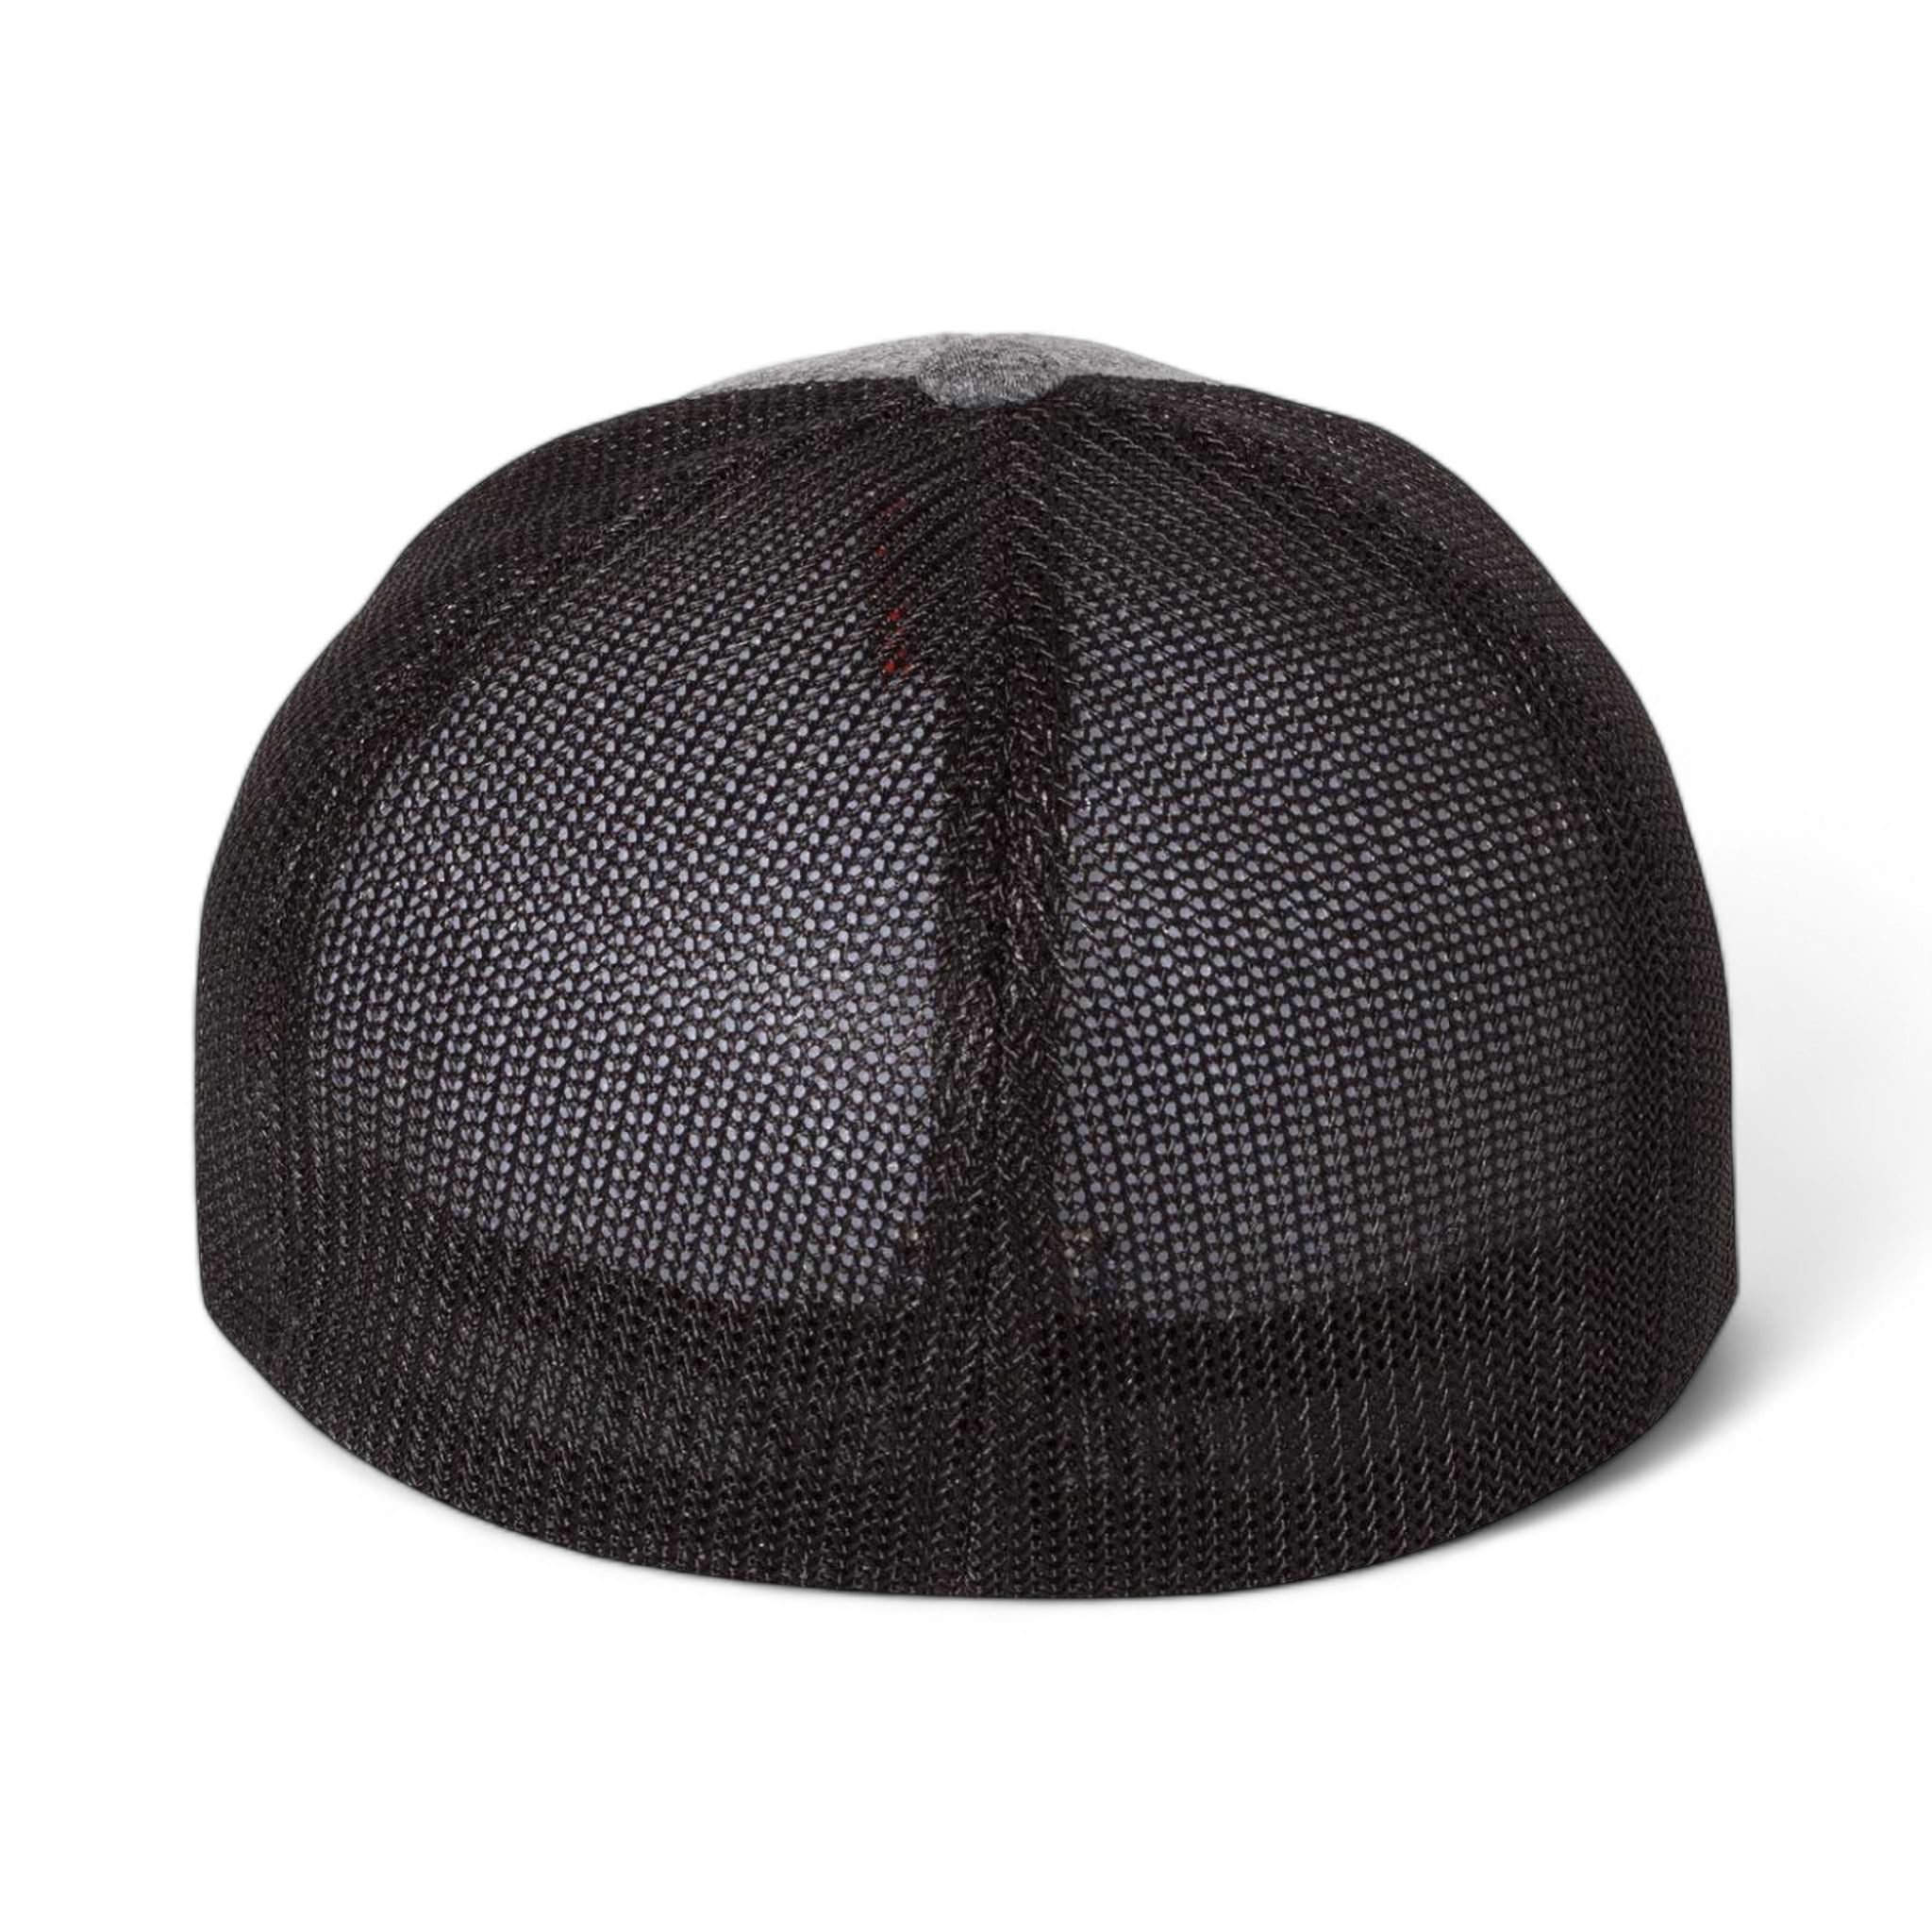 Back view of Flexfit 6311 custom hat in dark heather grey and black